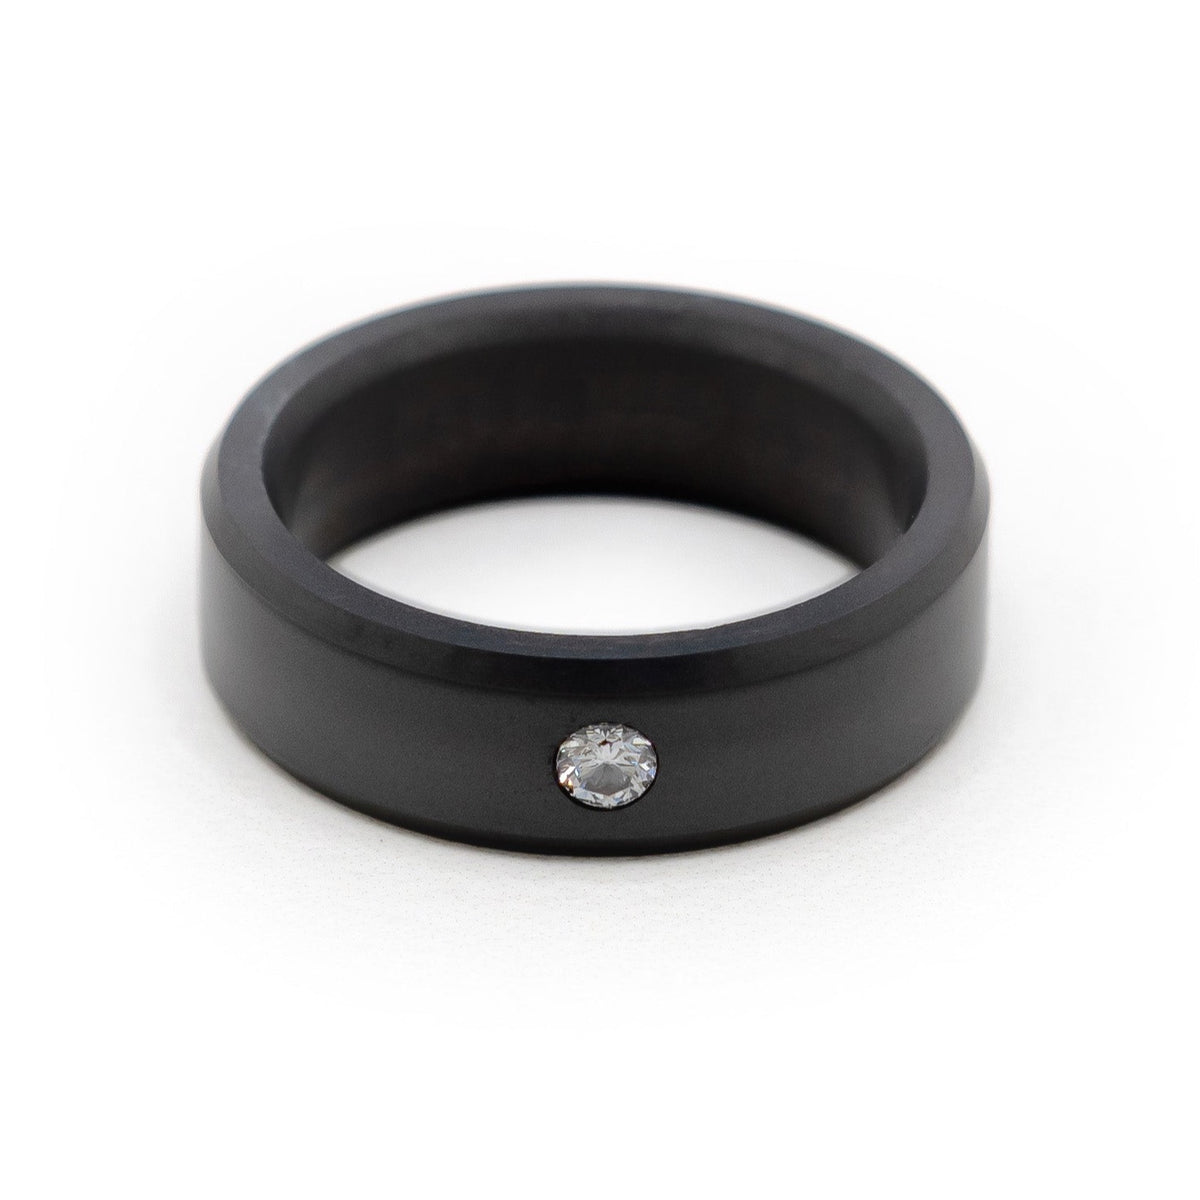 Apollo Beveled Diamond Inset Ring 7mm